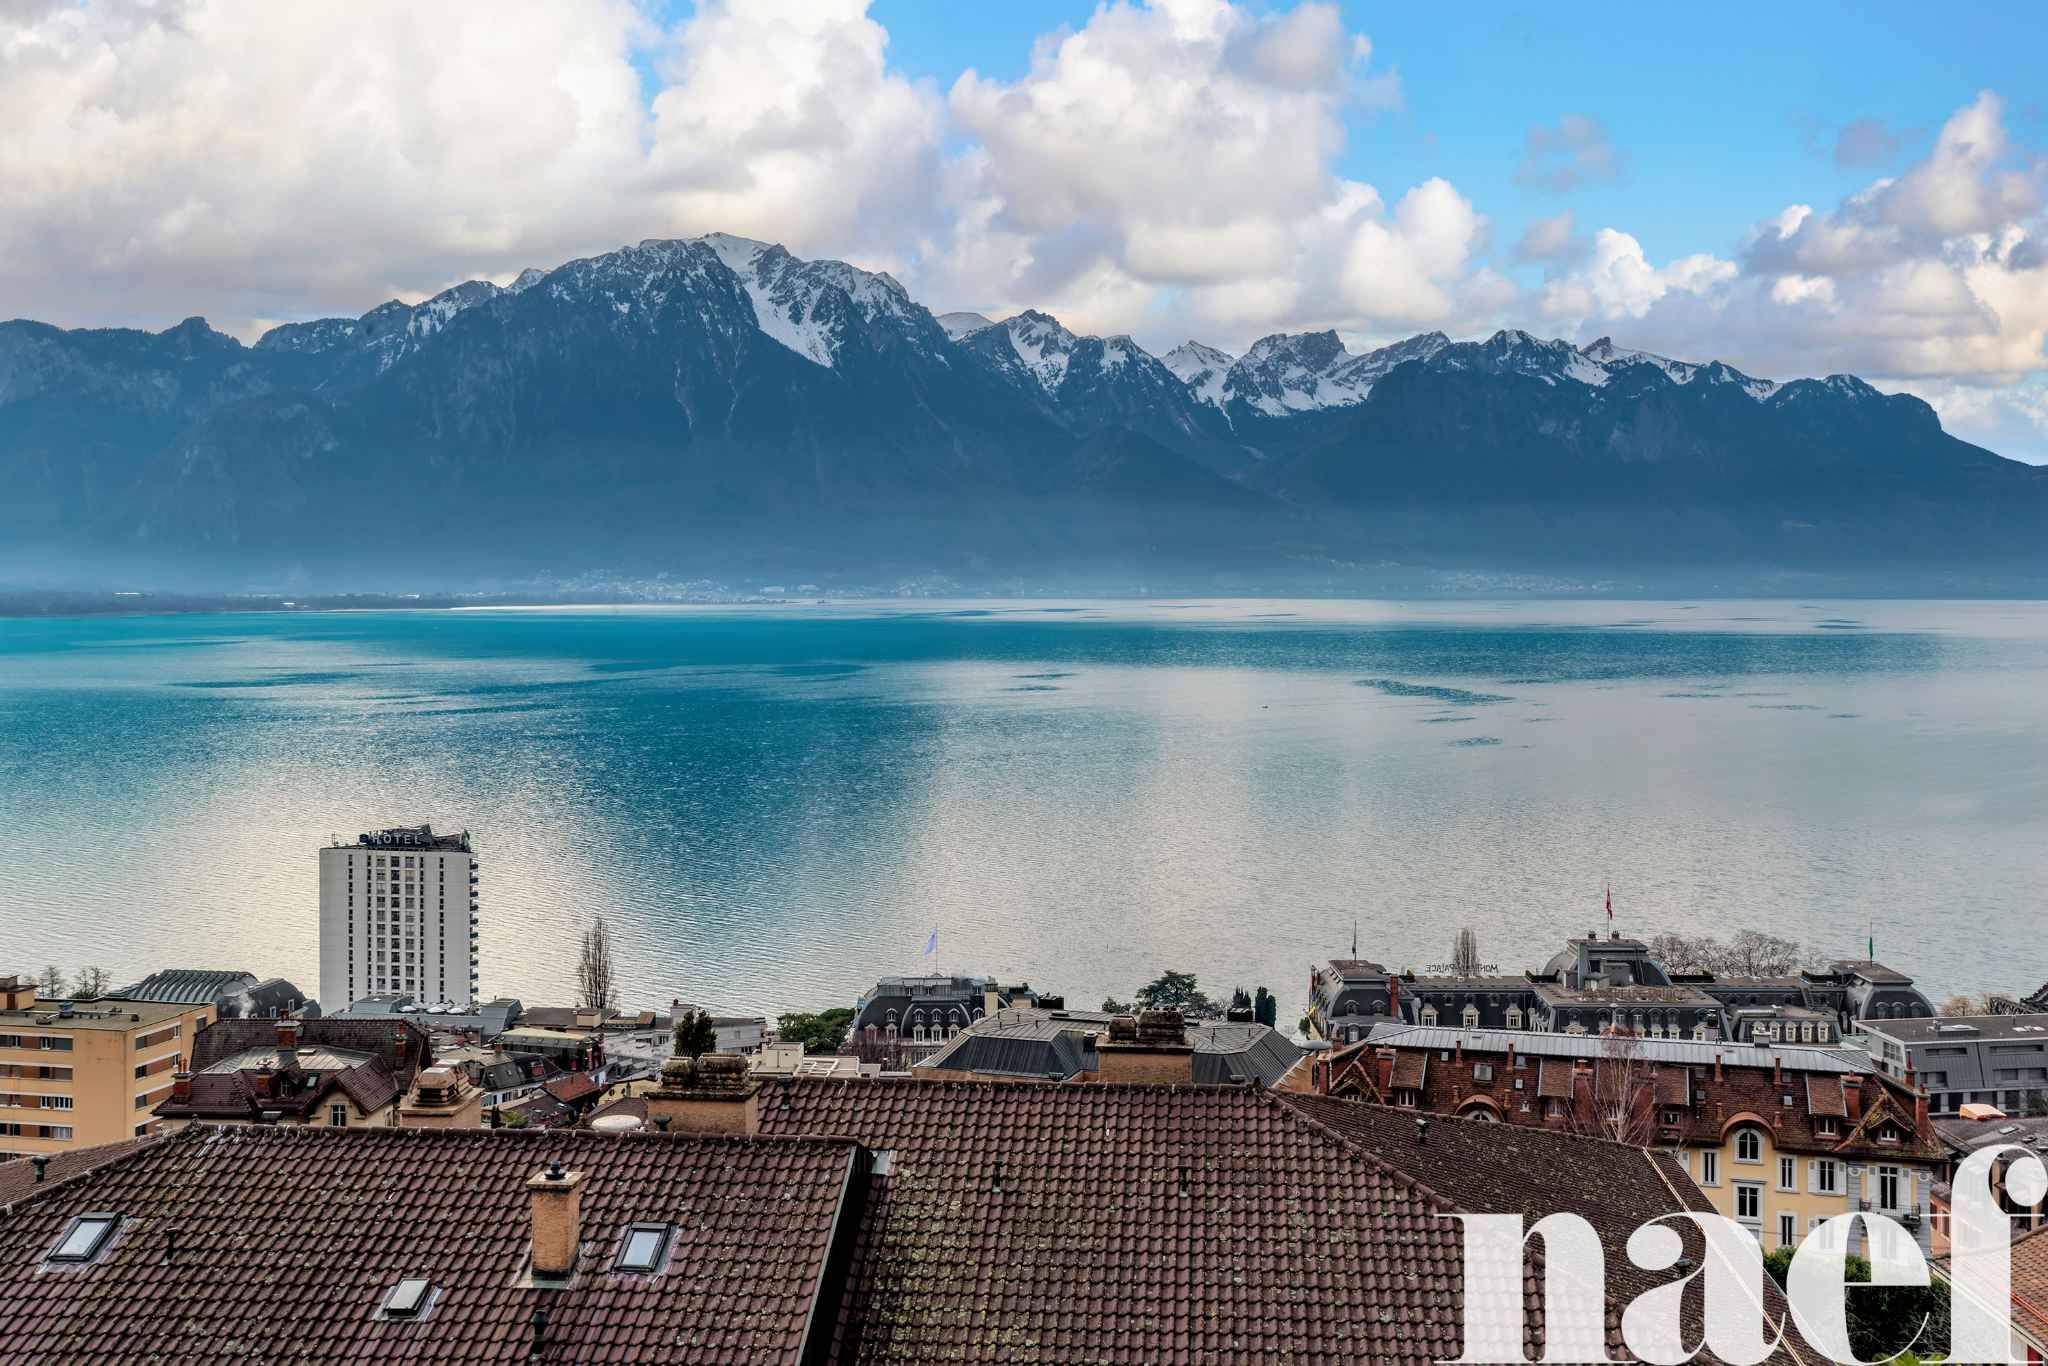 À vendre : Appartement 3 chambres Montreux - Ref : 39423 | Naef Immobilier